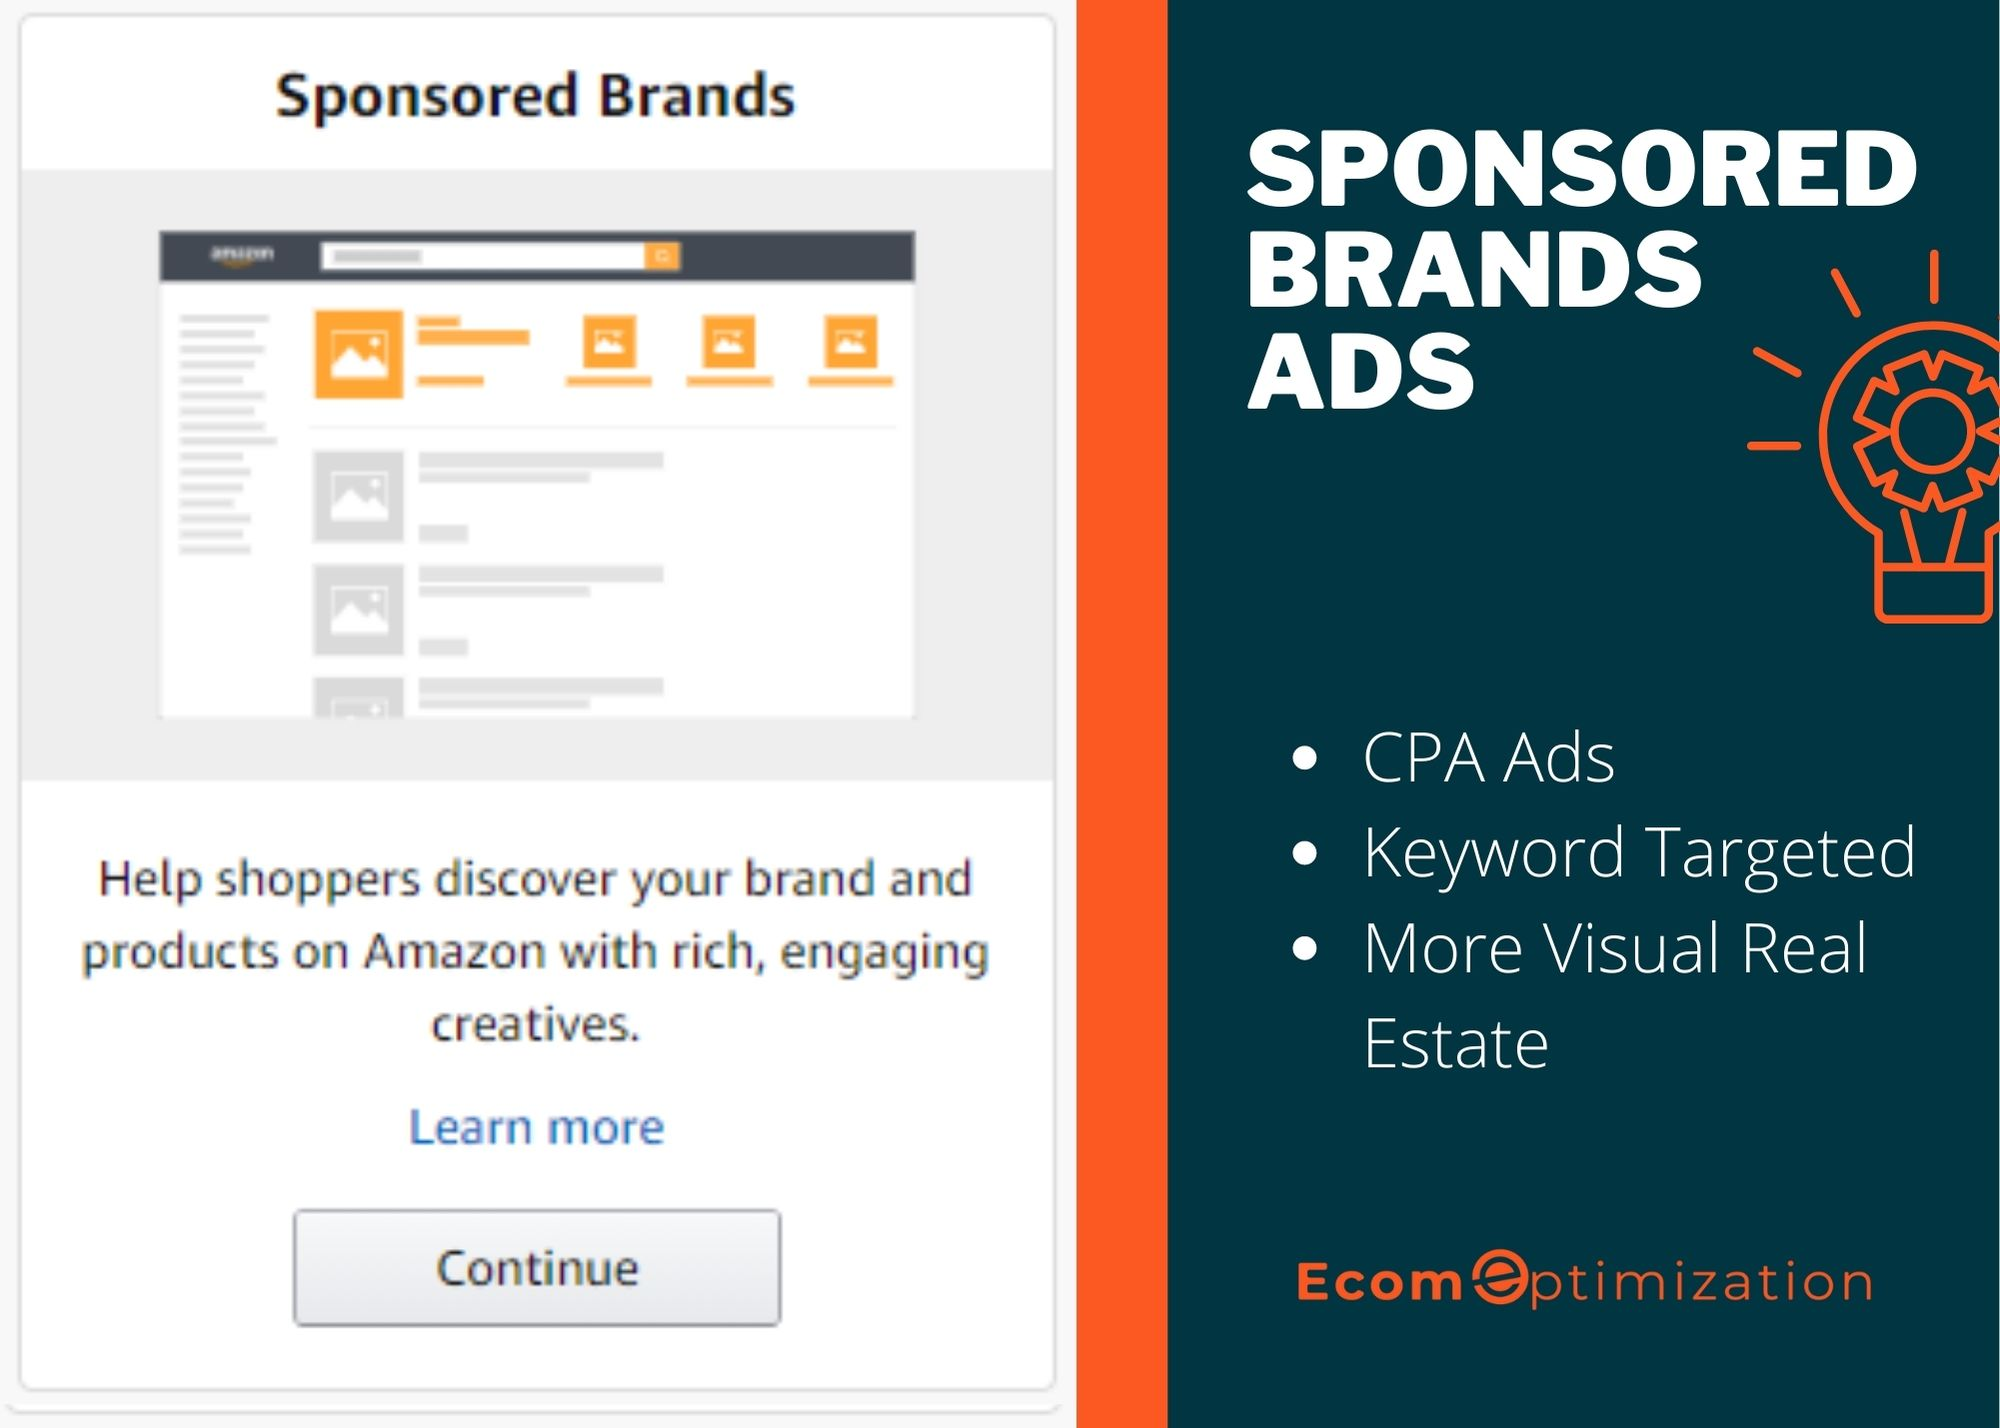 Amazon Sponsored Brands Ad Infographic